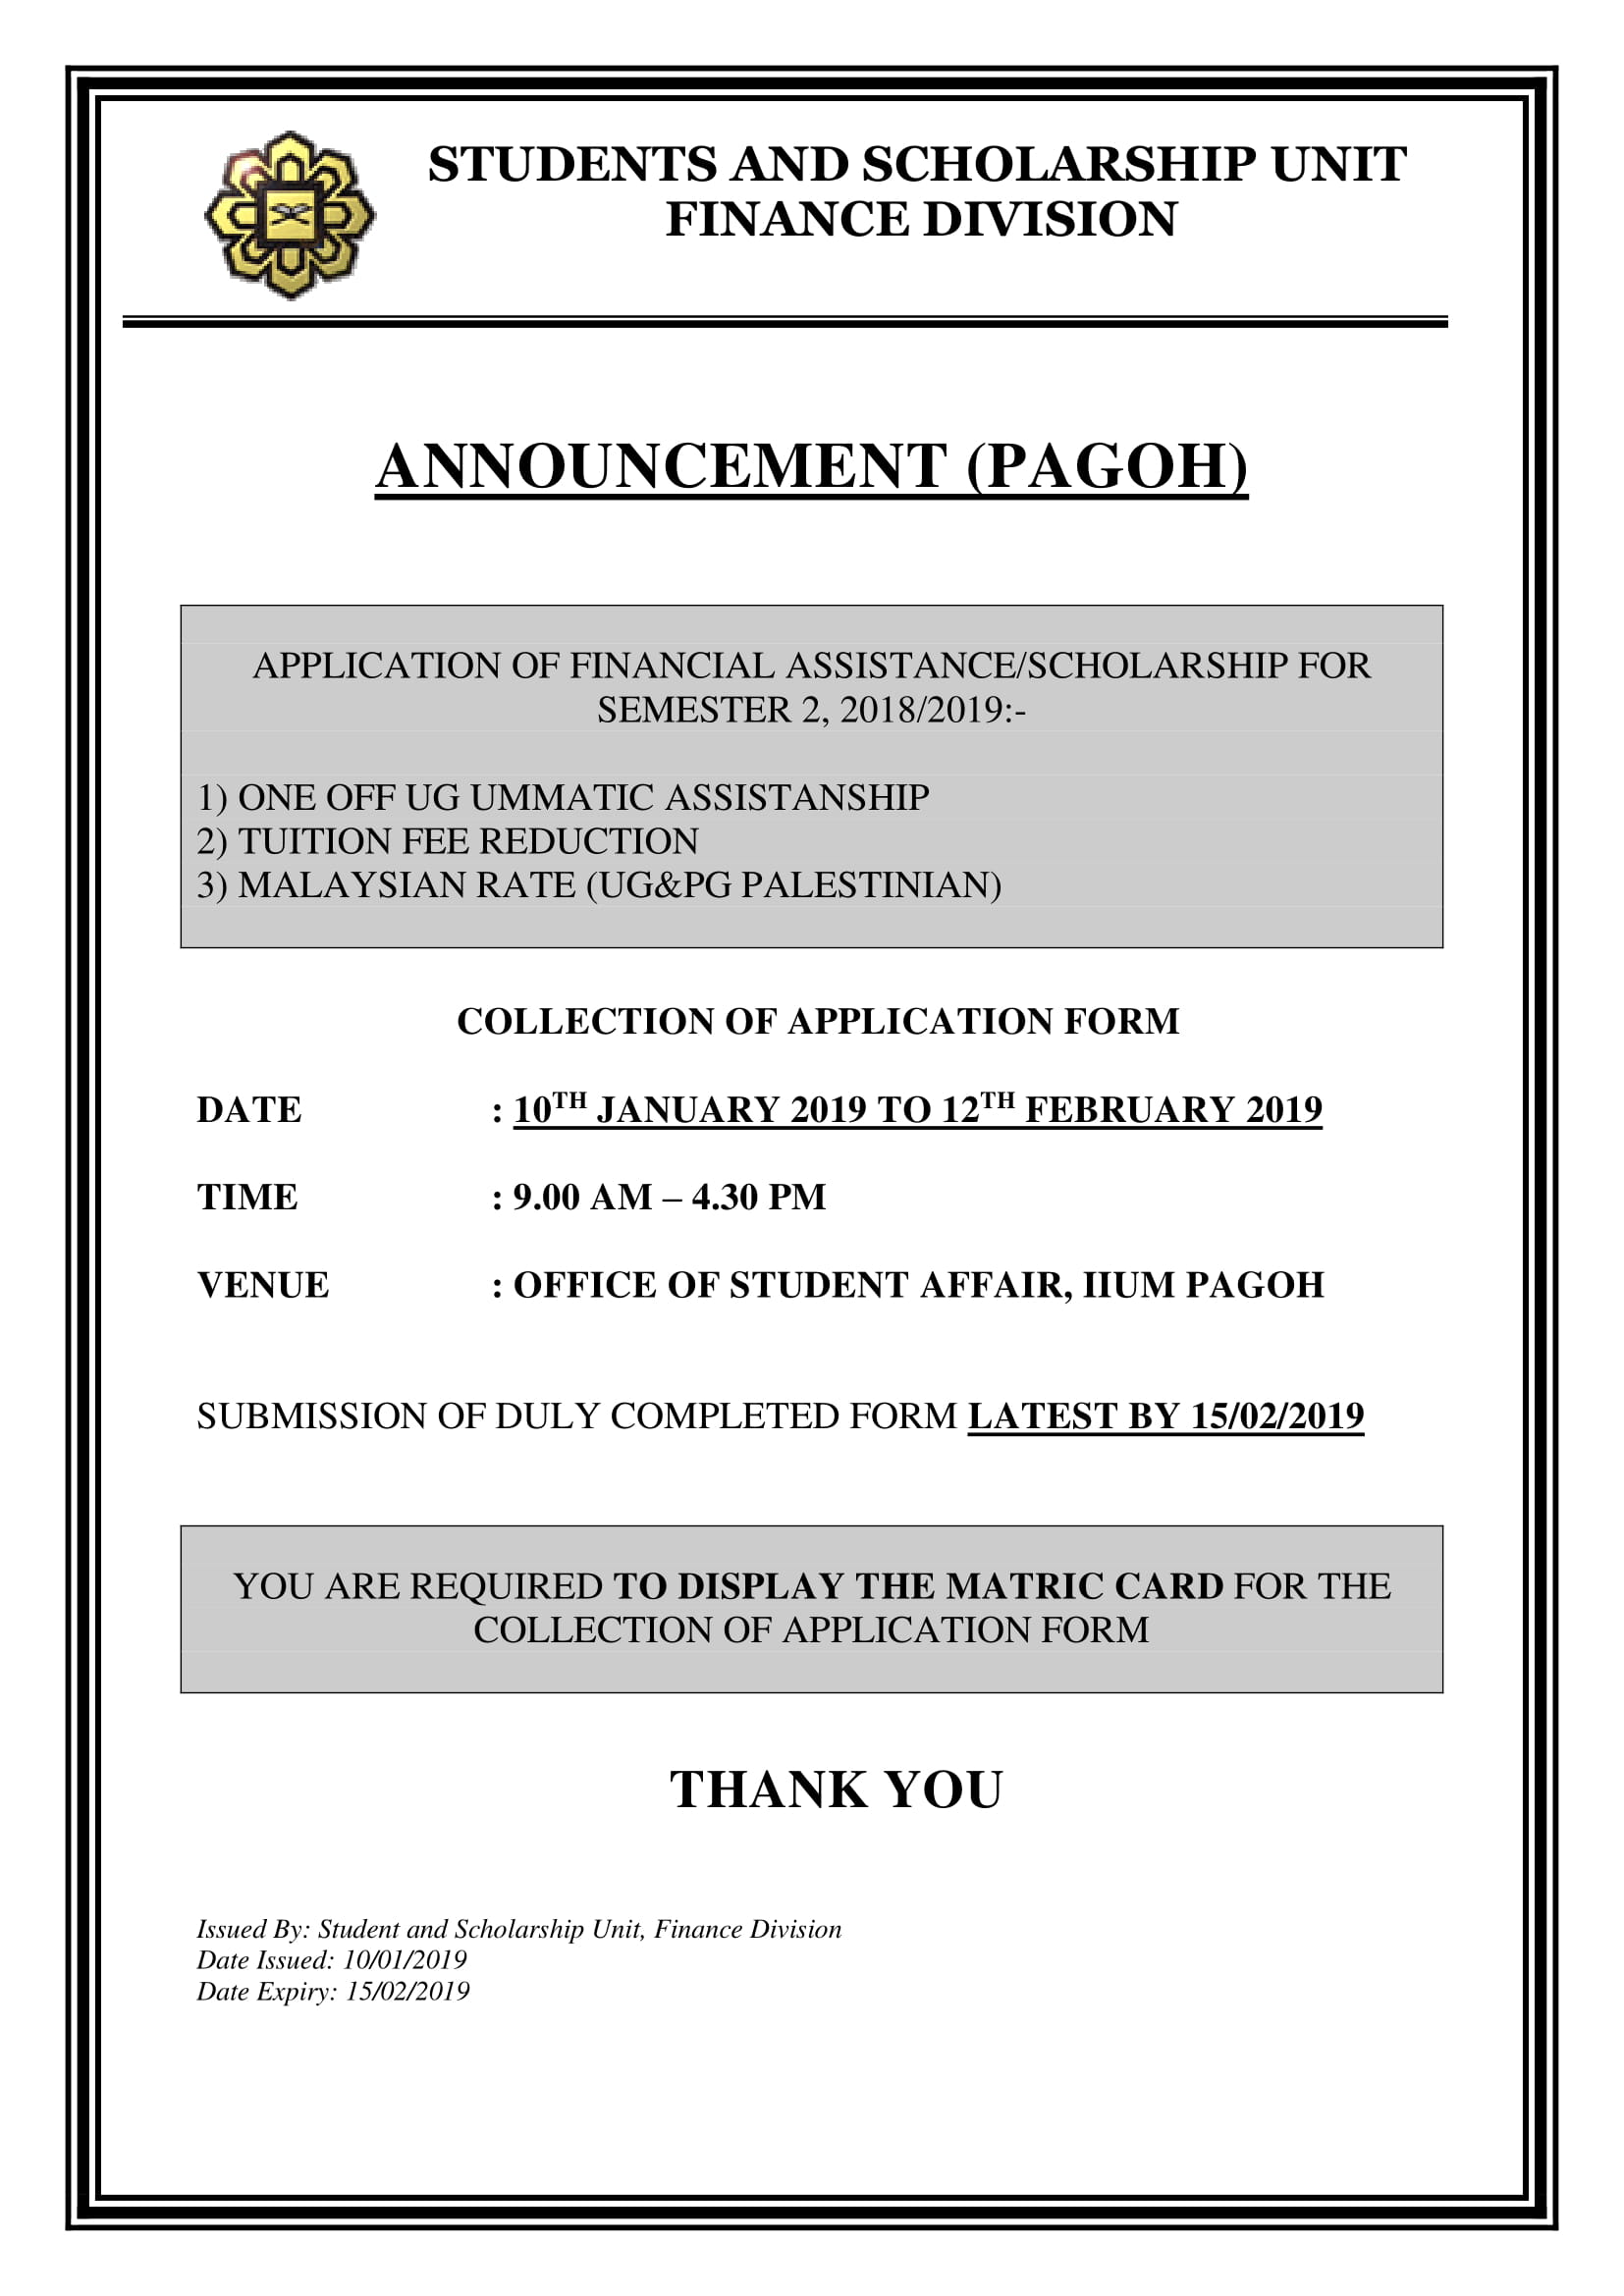 IFAC ANNOUNCEMENT PAGOH PDF-1